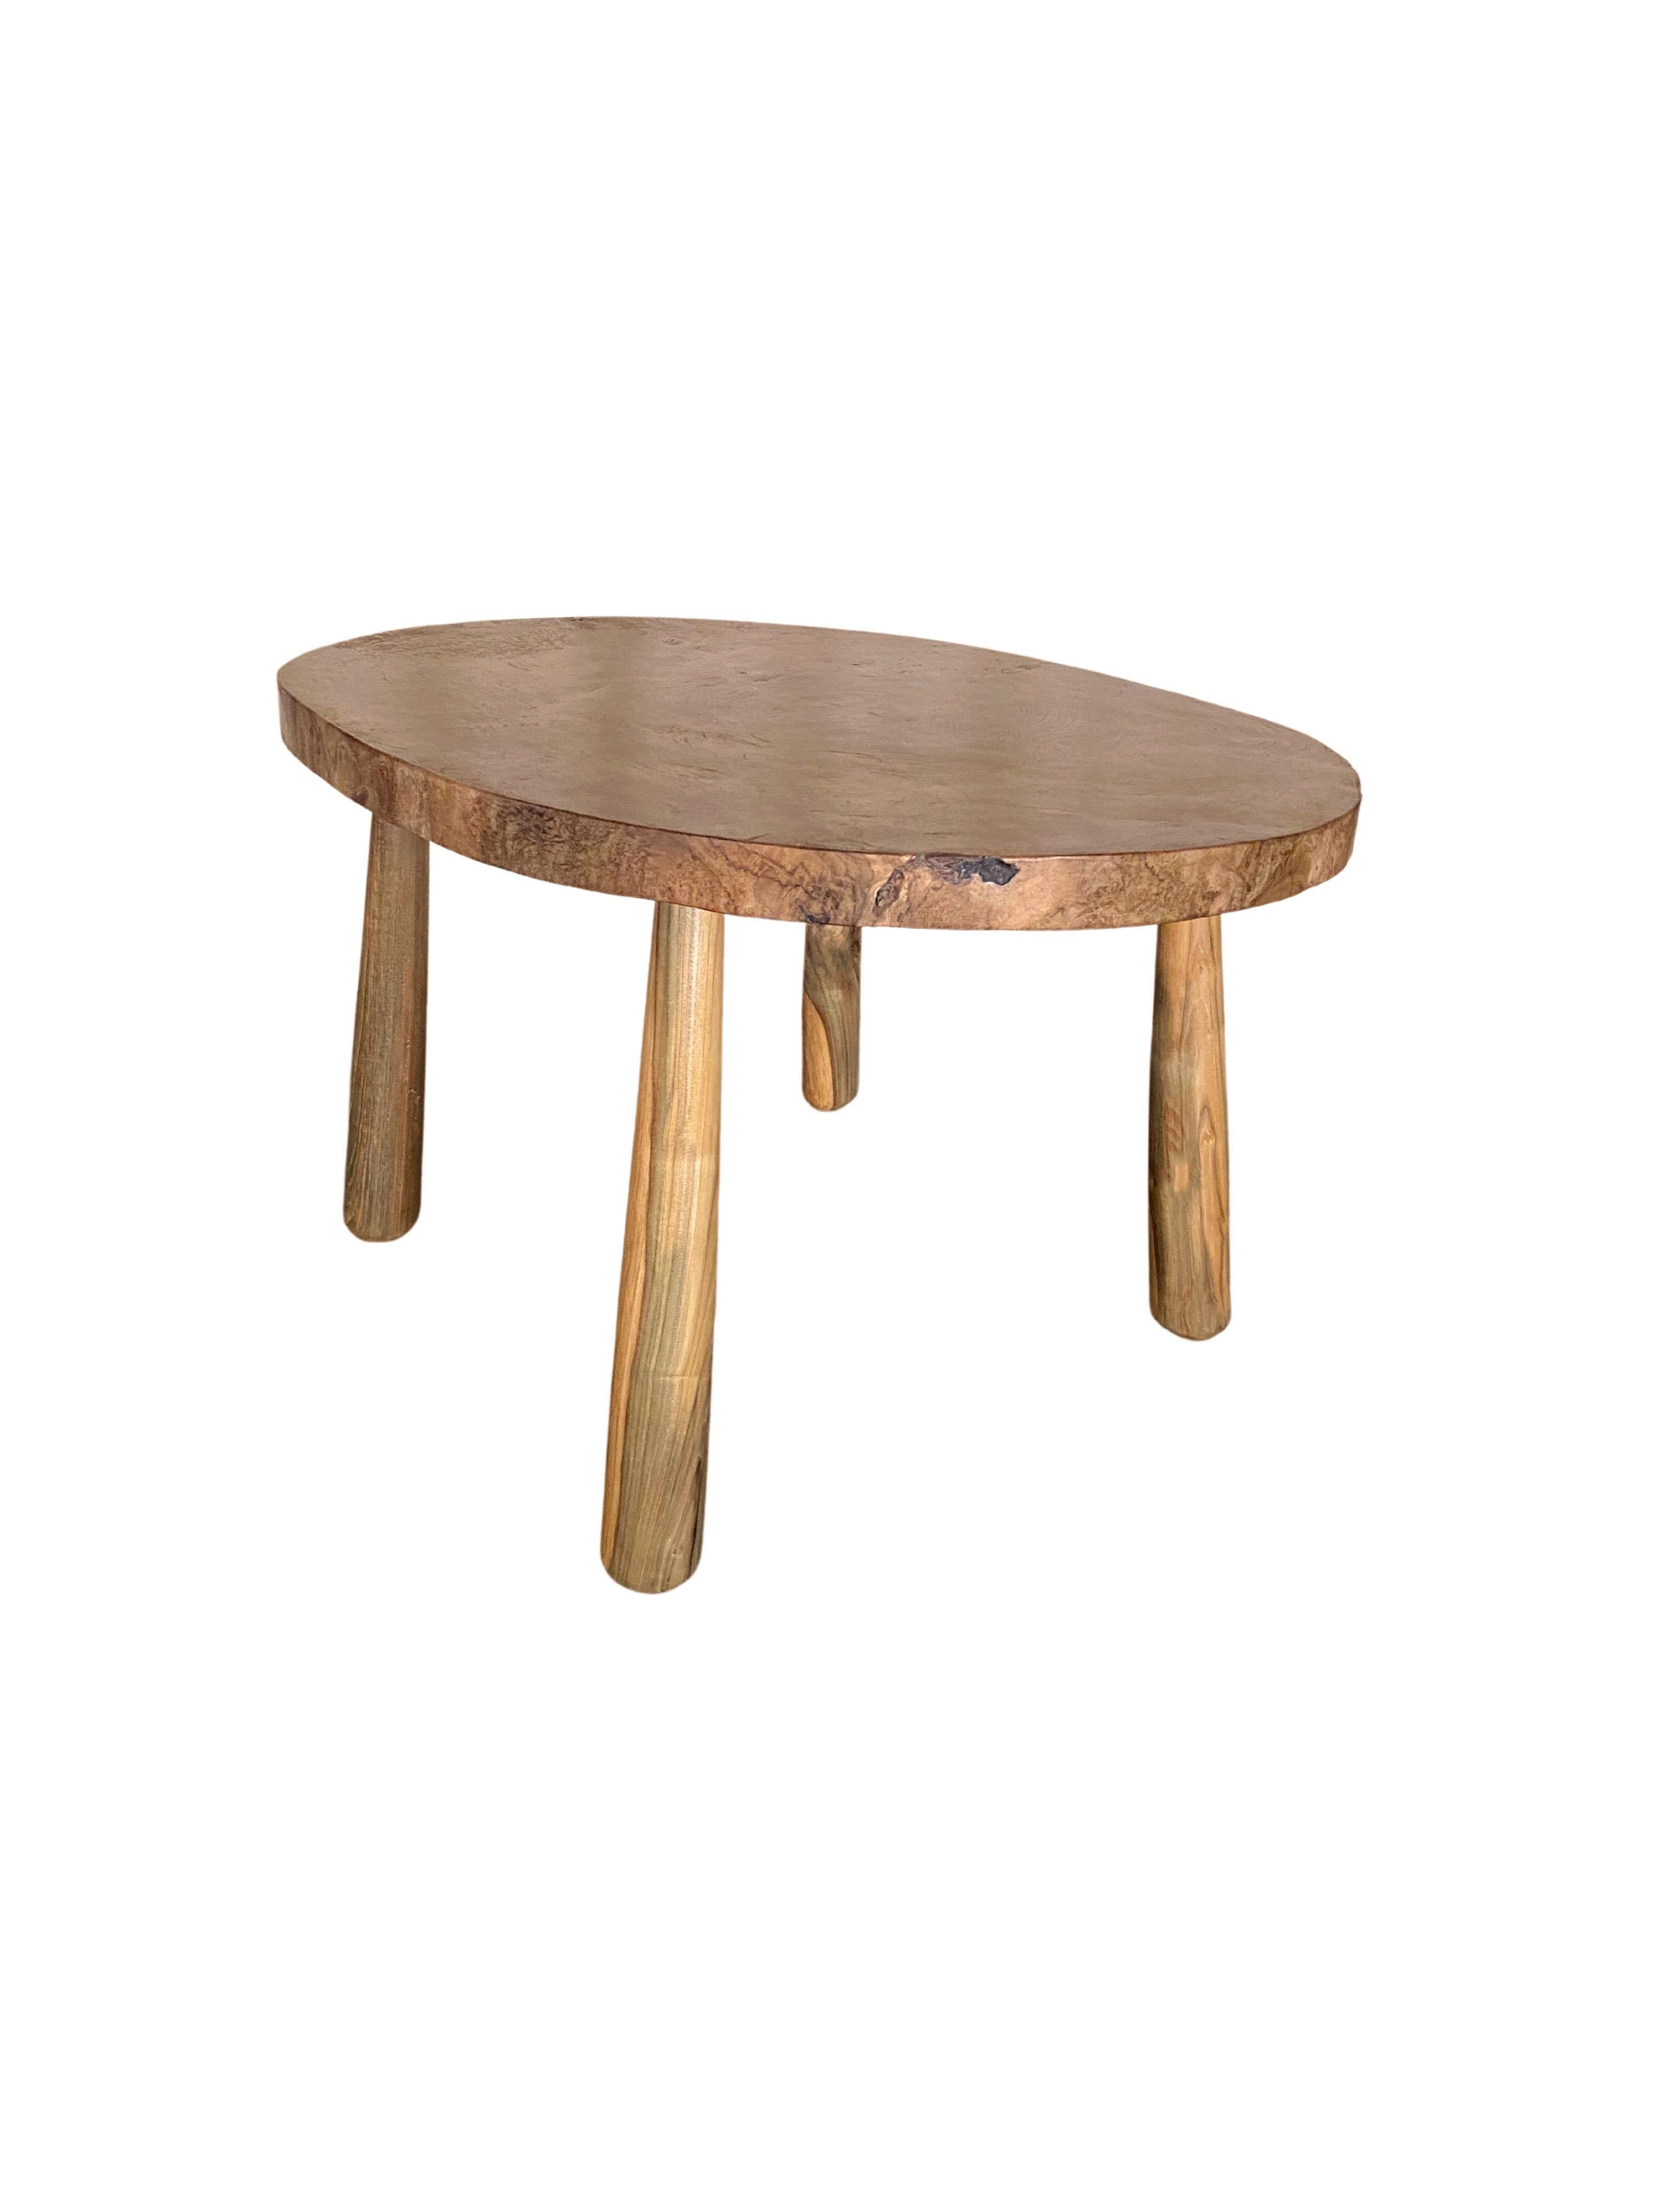 Organic Modern Sculptural Teak Burl Wood Side Table For Sale